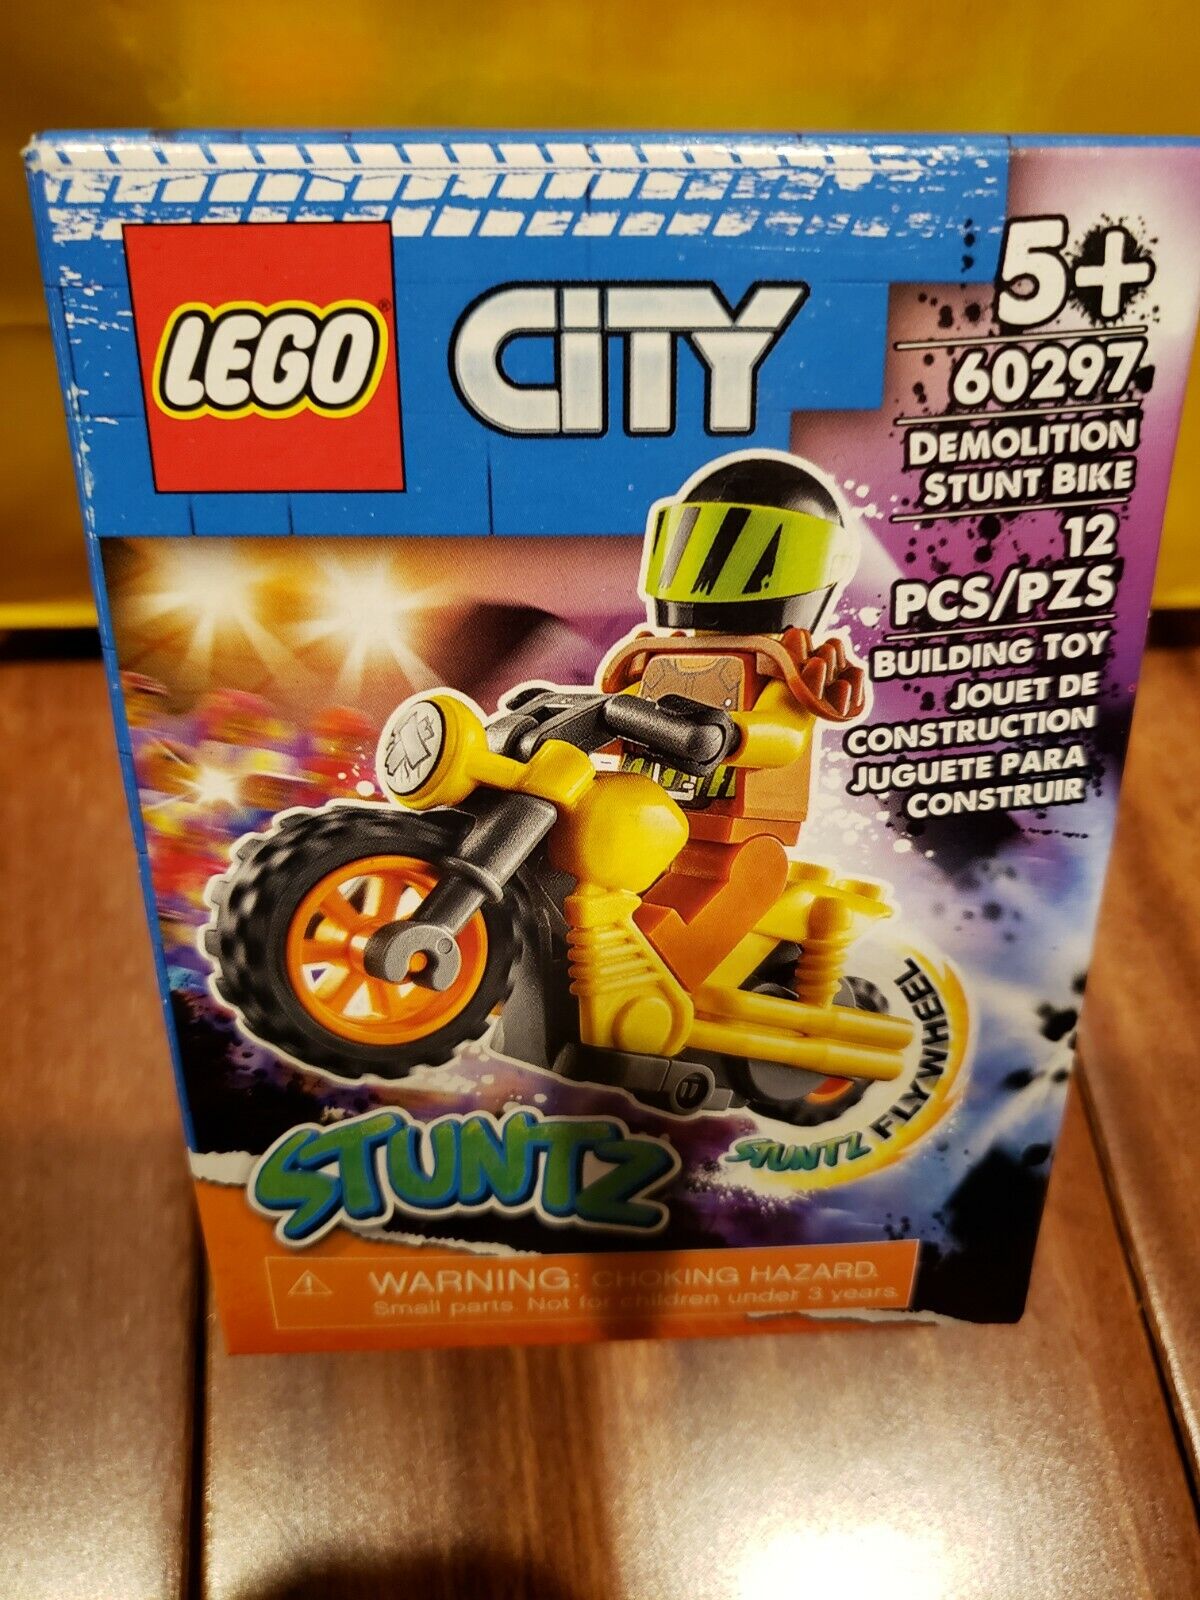 LEGO City Stuntz Demolition Stunt Bike (60297)